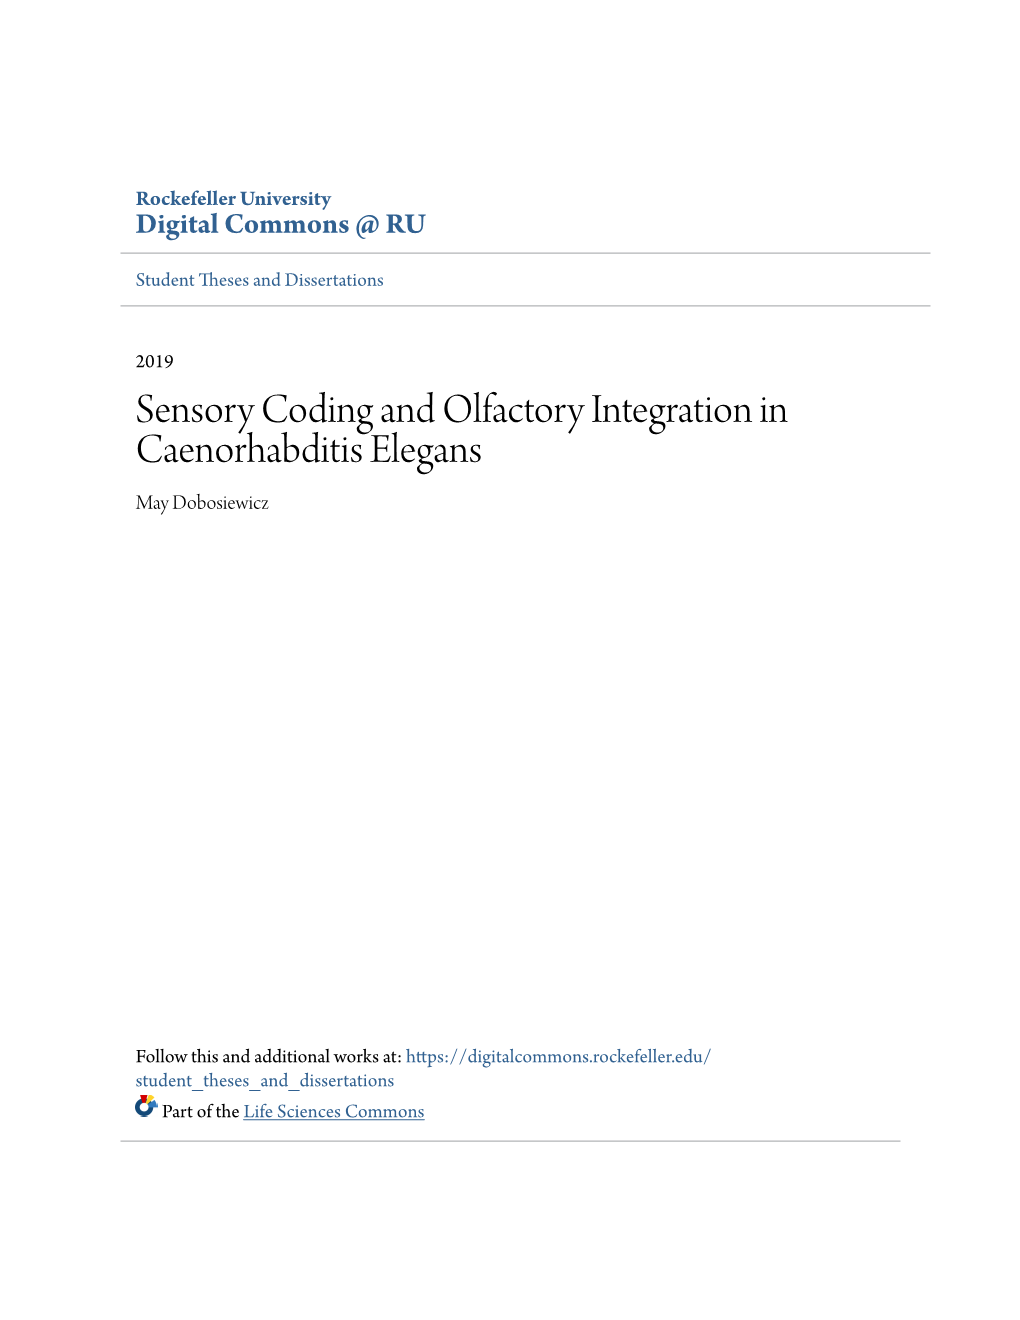 Sensory Coding and Olfactory Integration in Caenorhabditis Elegans May Dobosiewicz